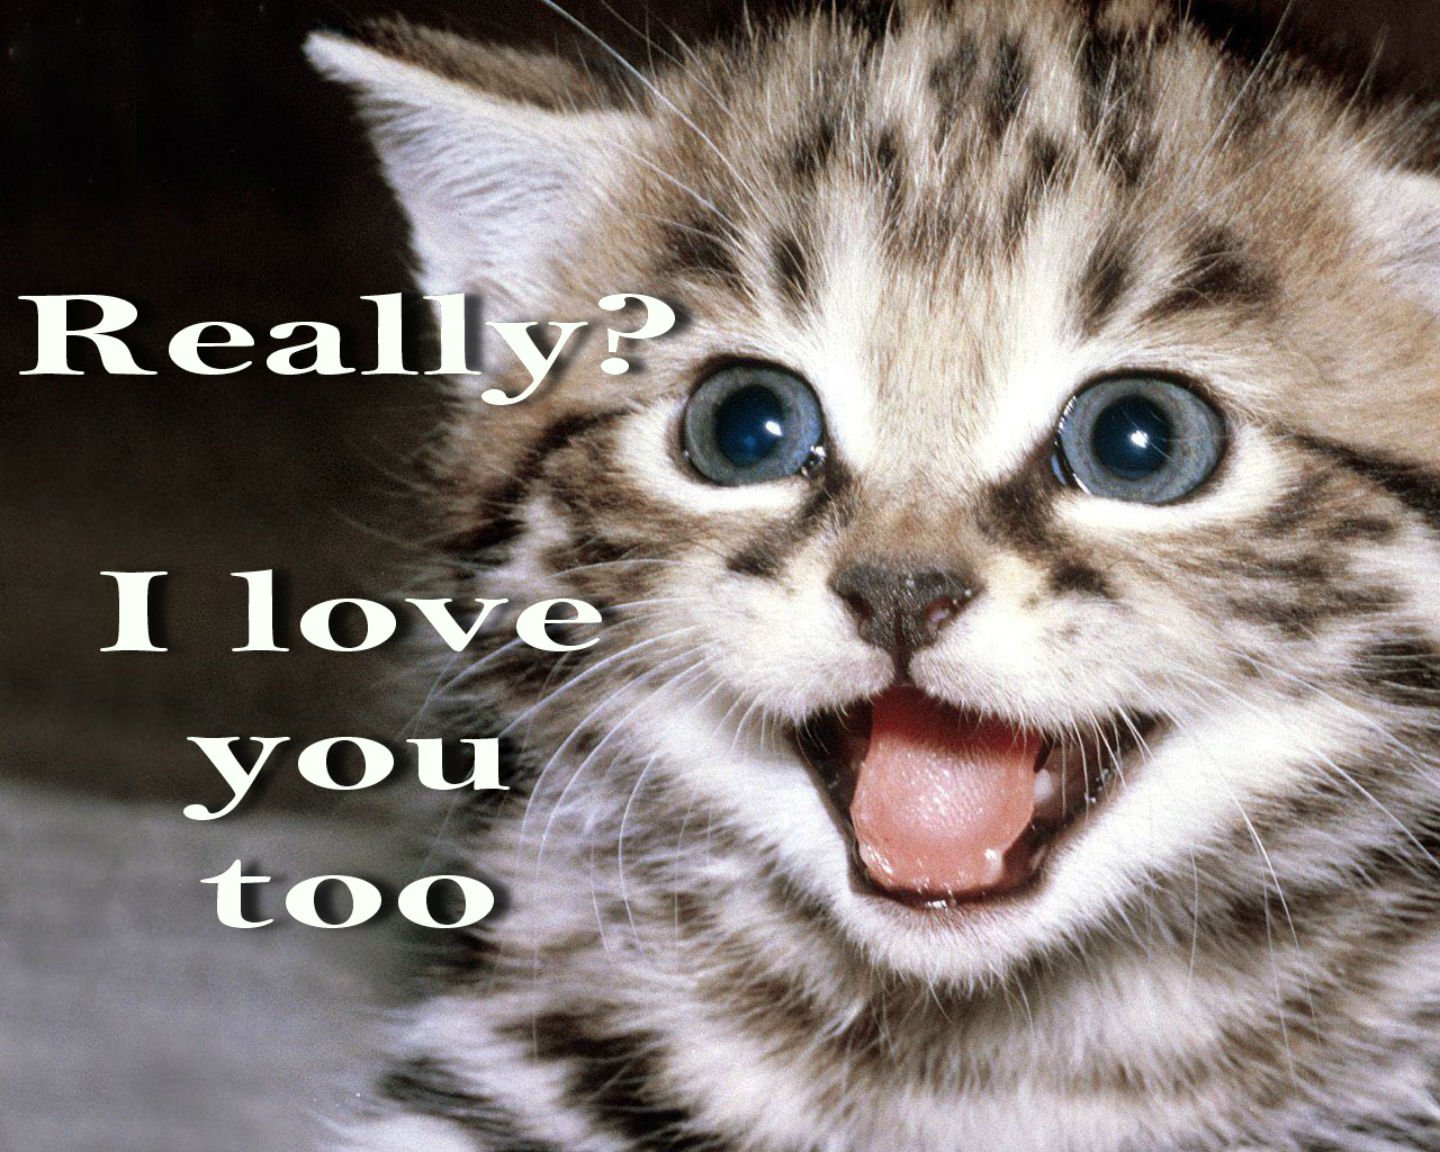 cat, Meme, Quote, Funny, Humor, Grumpy, Kitten, Mood, Love Wallpaper